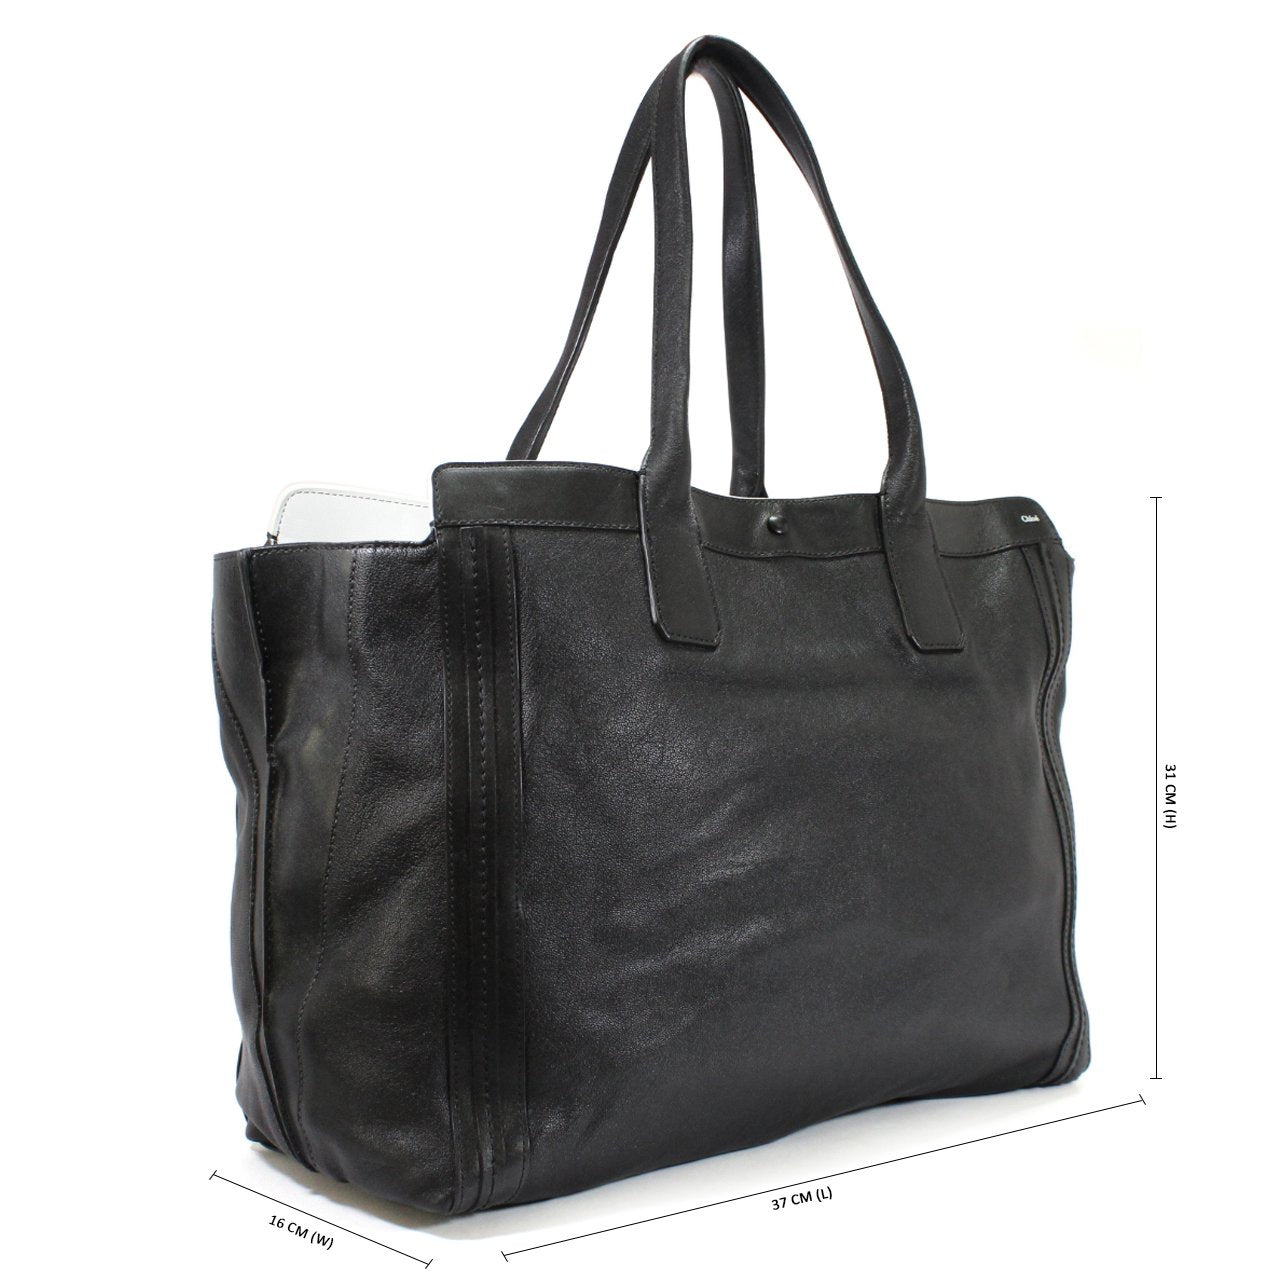 Chloe Alison Shopper Black Leather East/West Tote Bag